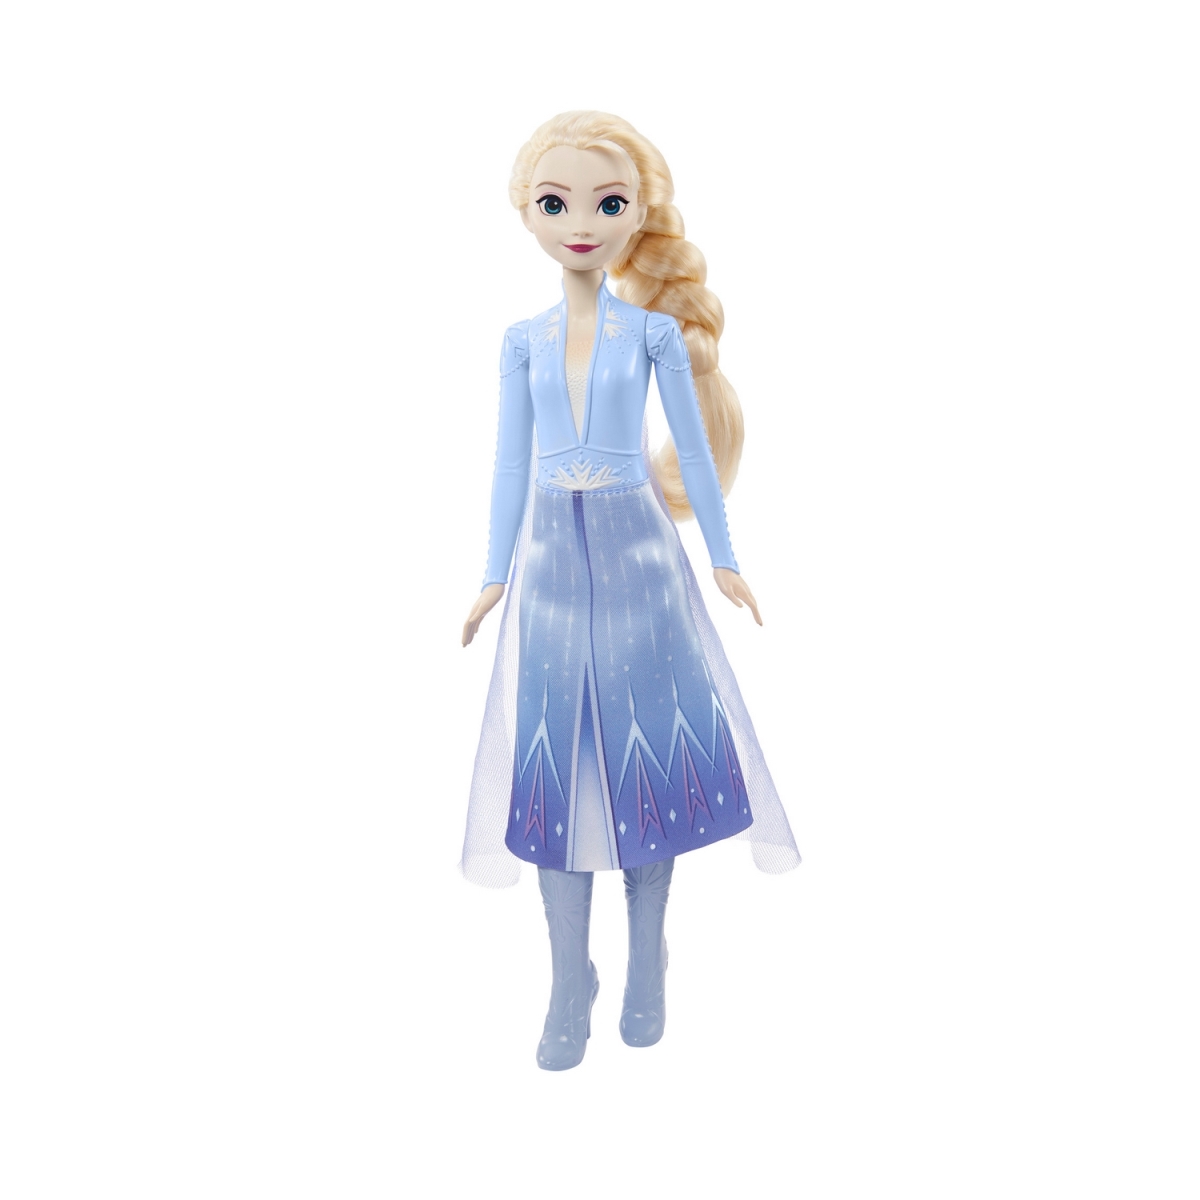 Picture of Mattel HLW48 Disney Frozen 2 Elsa Doll